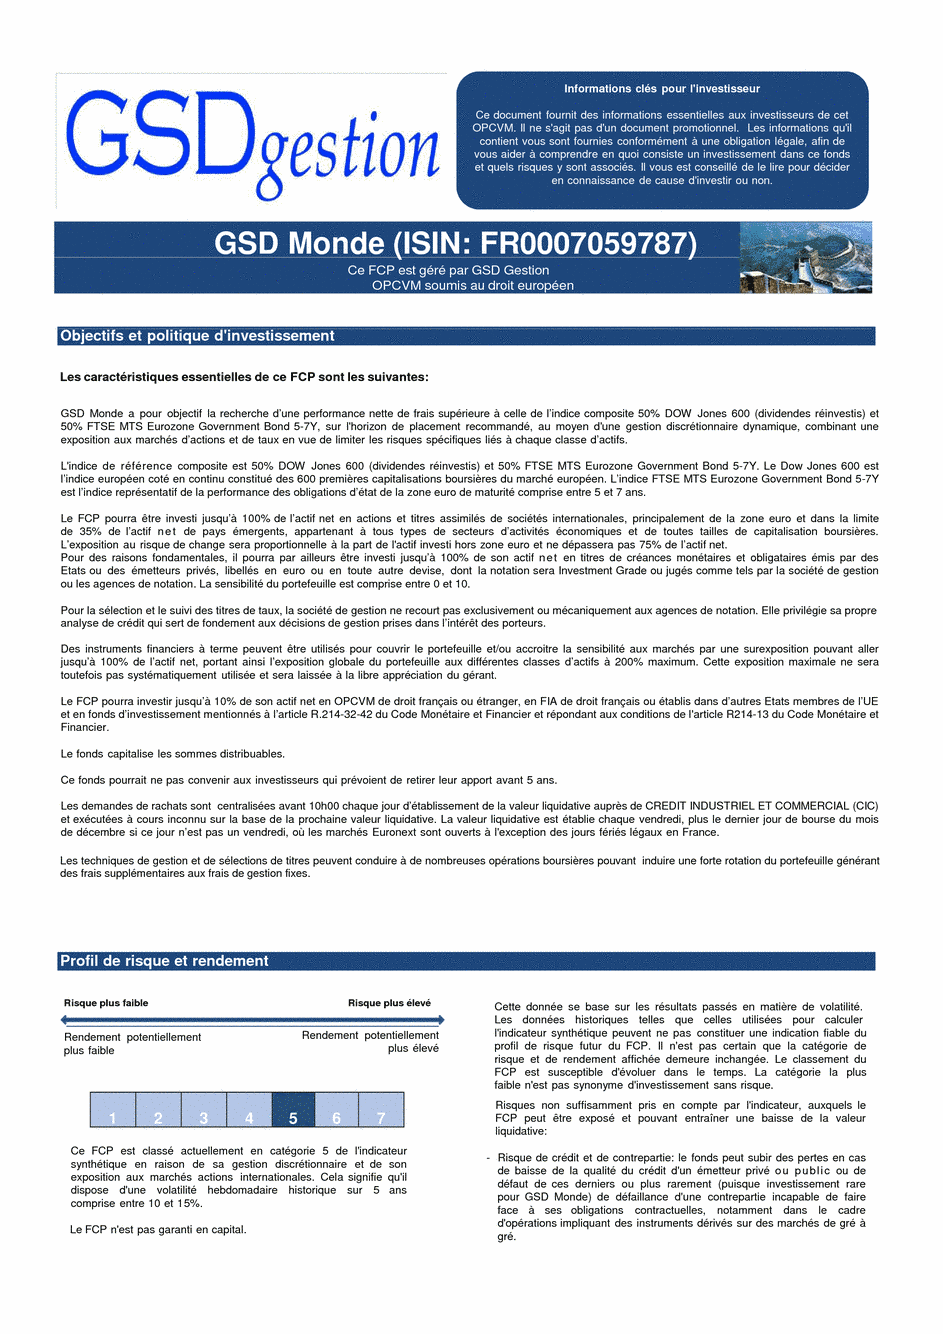 DICI-Prospectus GSD Monde - 23/02/2018 - Français